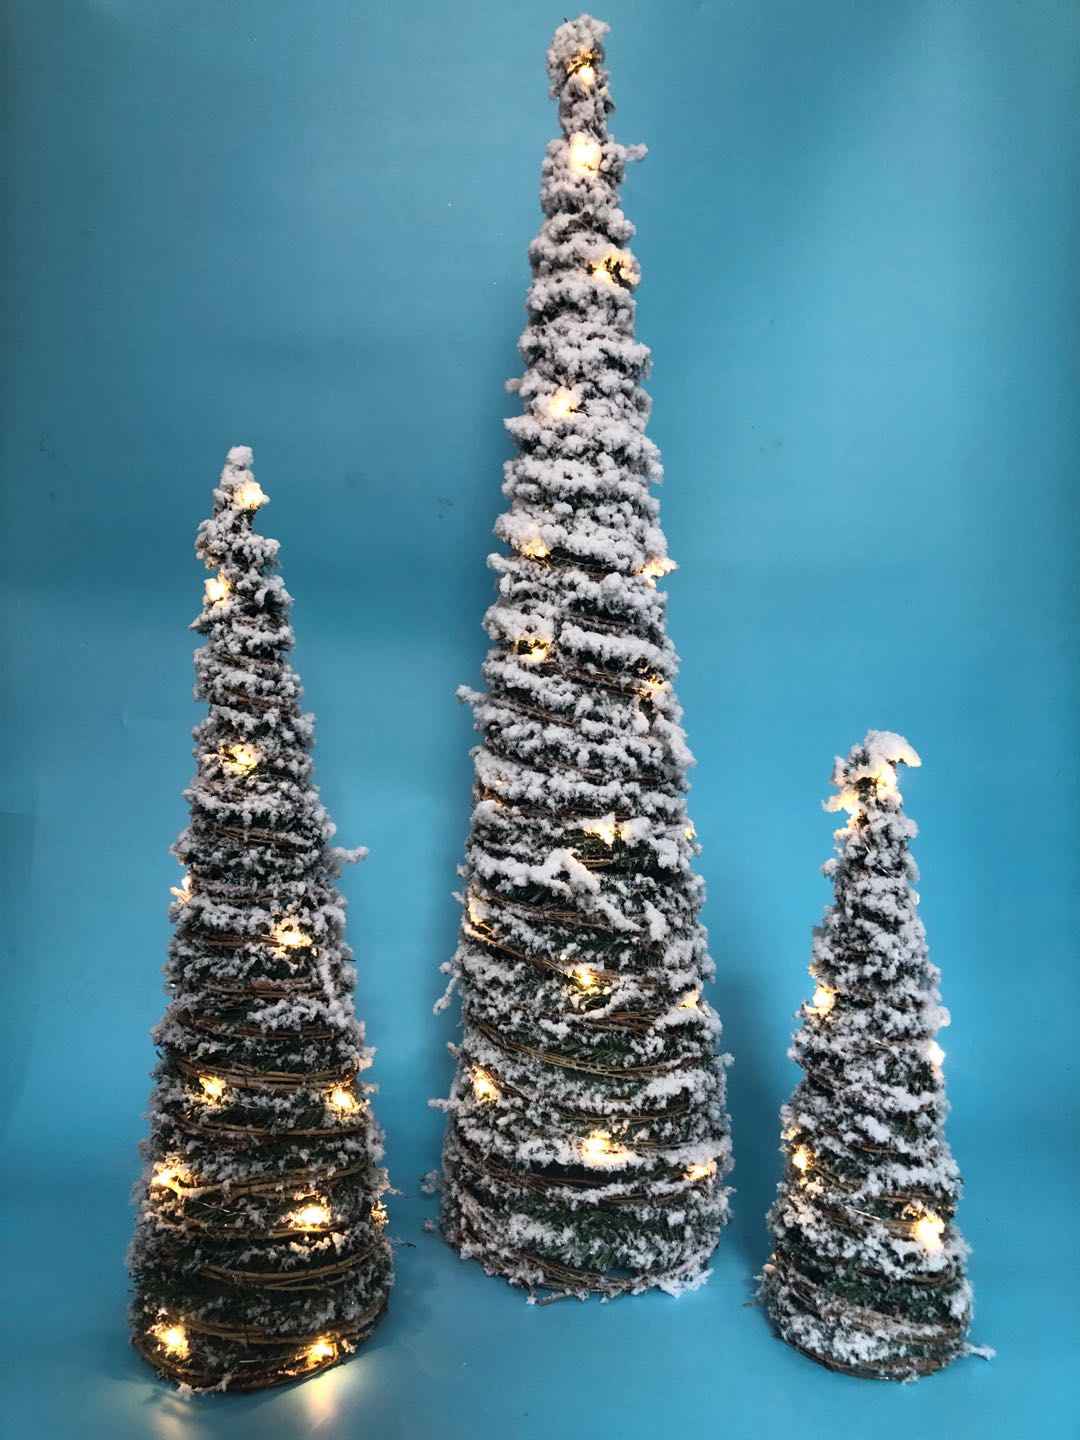 Lighting Christmas tree set for indoor